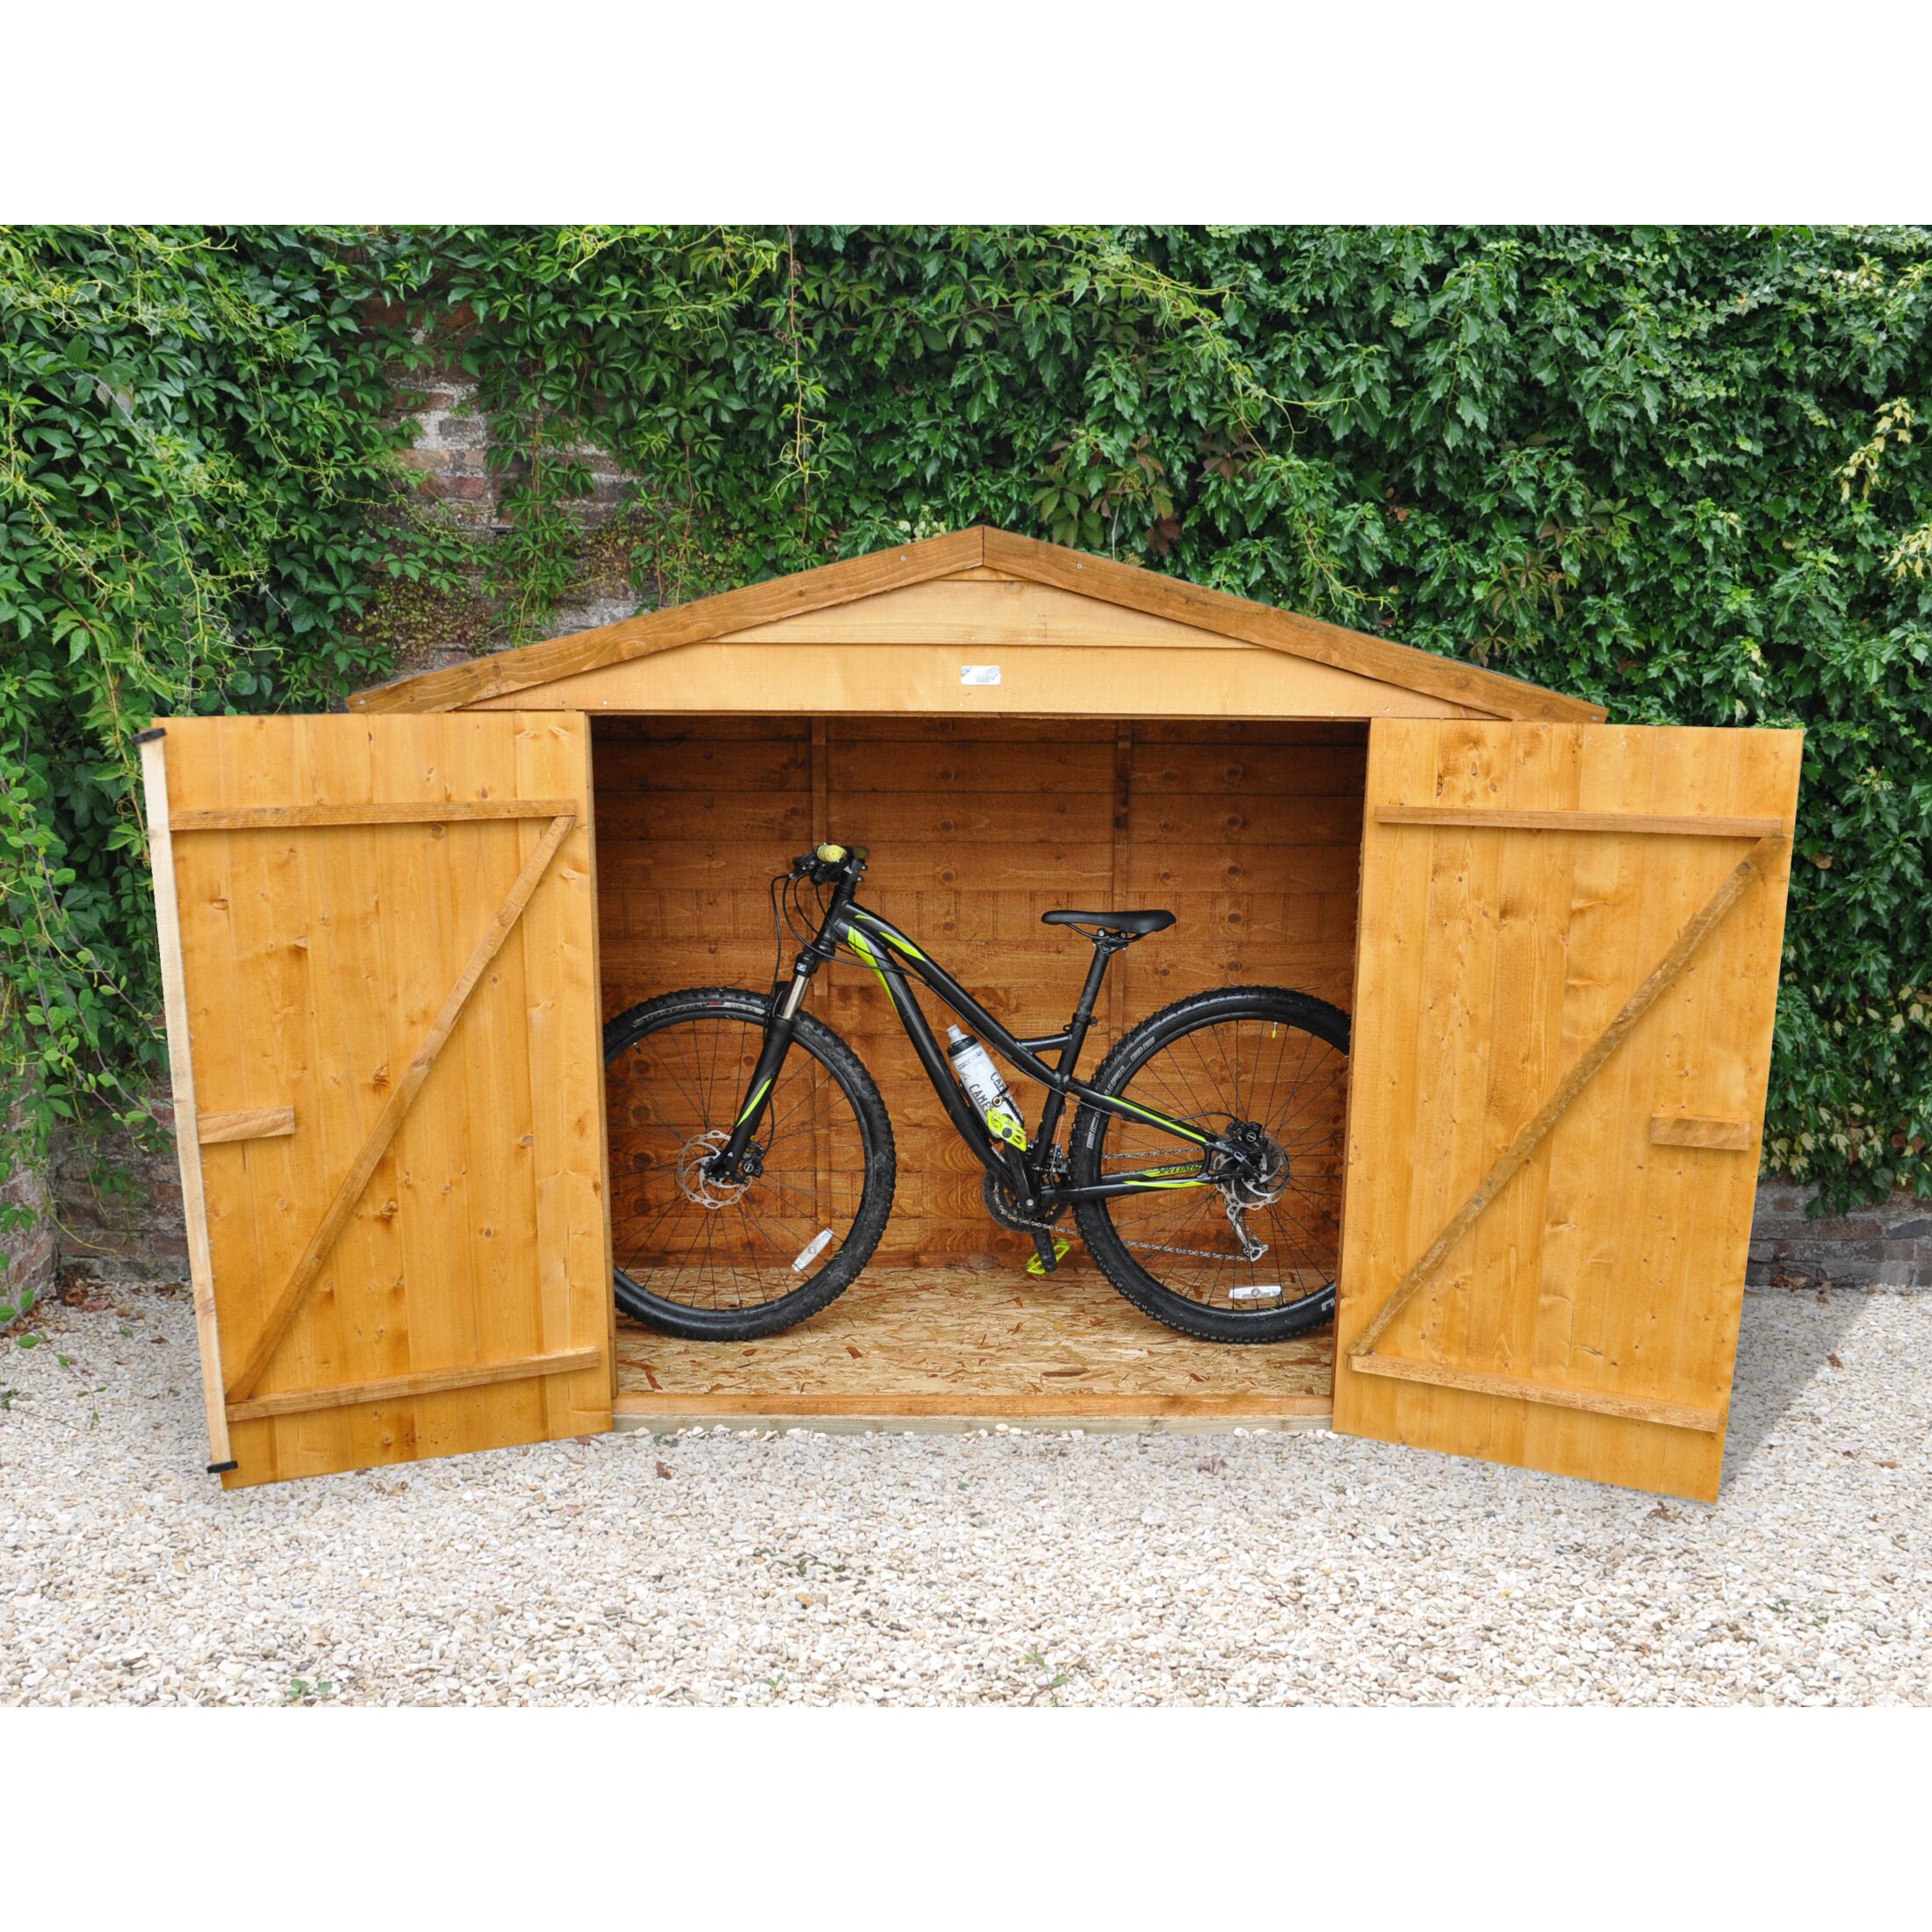 Wooden bike shed